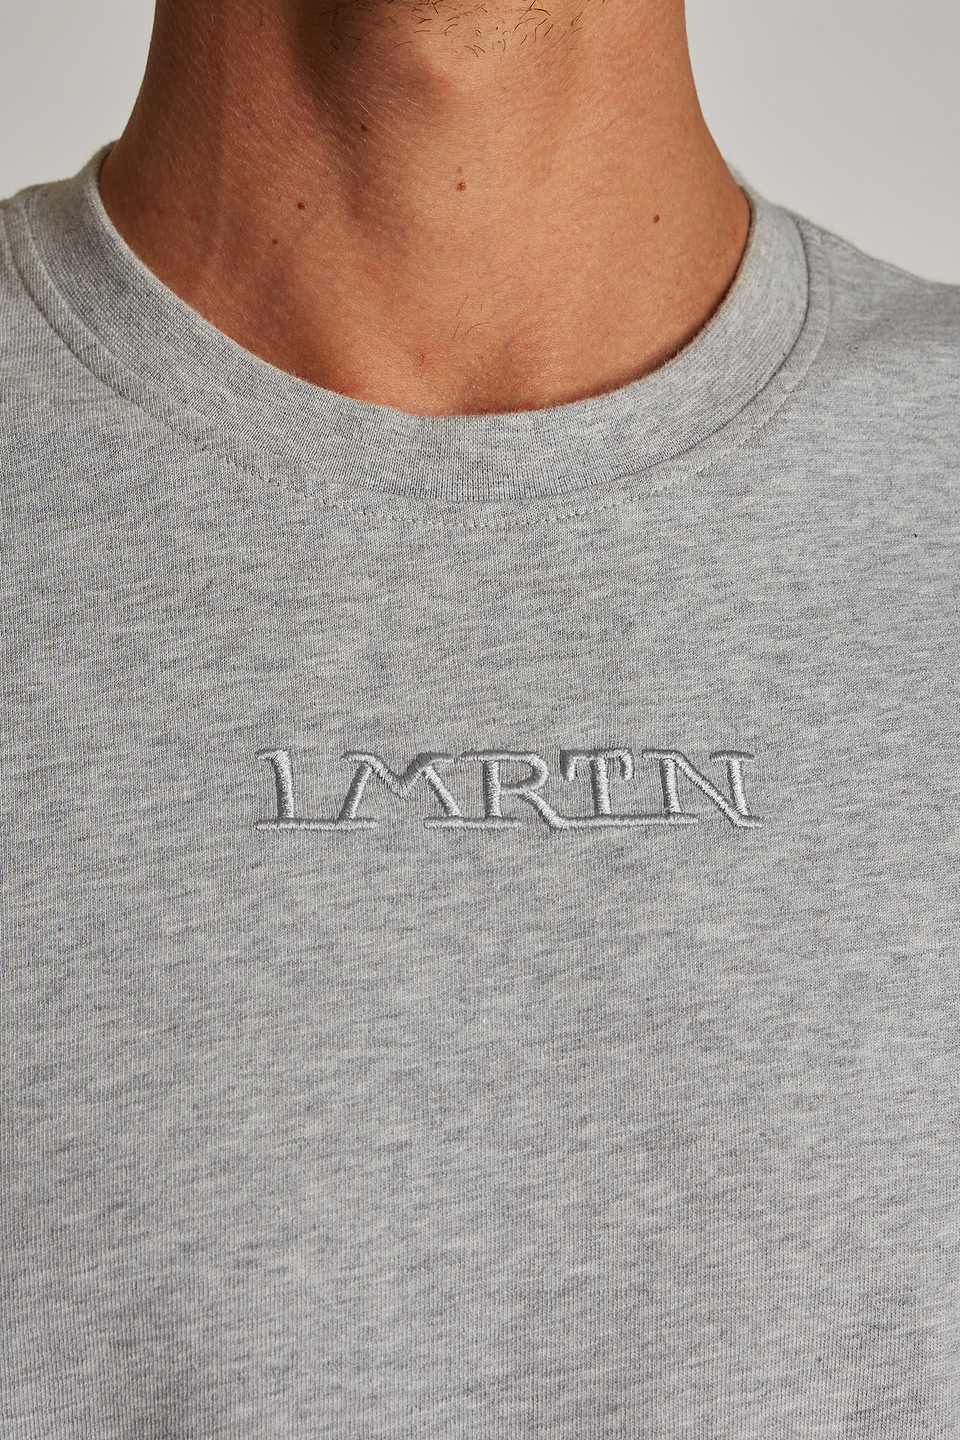 Herren-T-Shirt mit kurzem Arm aus Baumwolle, oversized Modell | La Martina - Official Online Shop